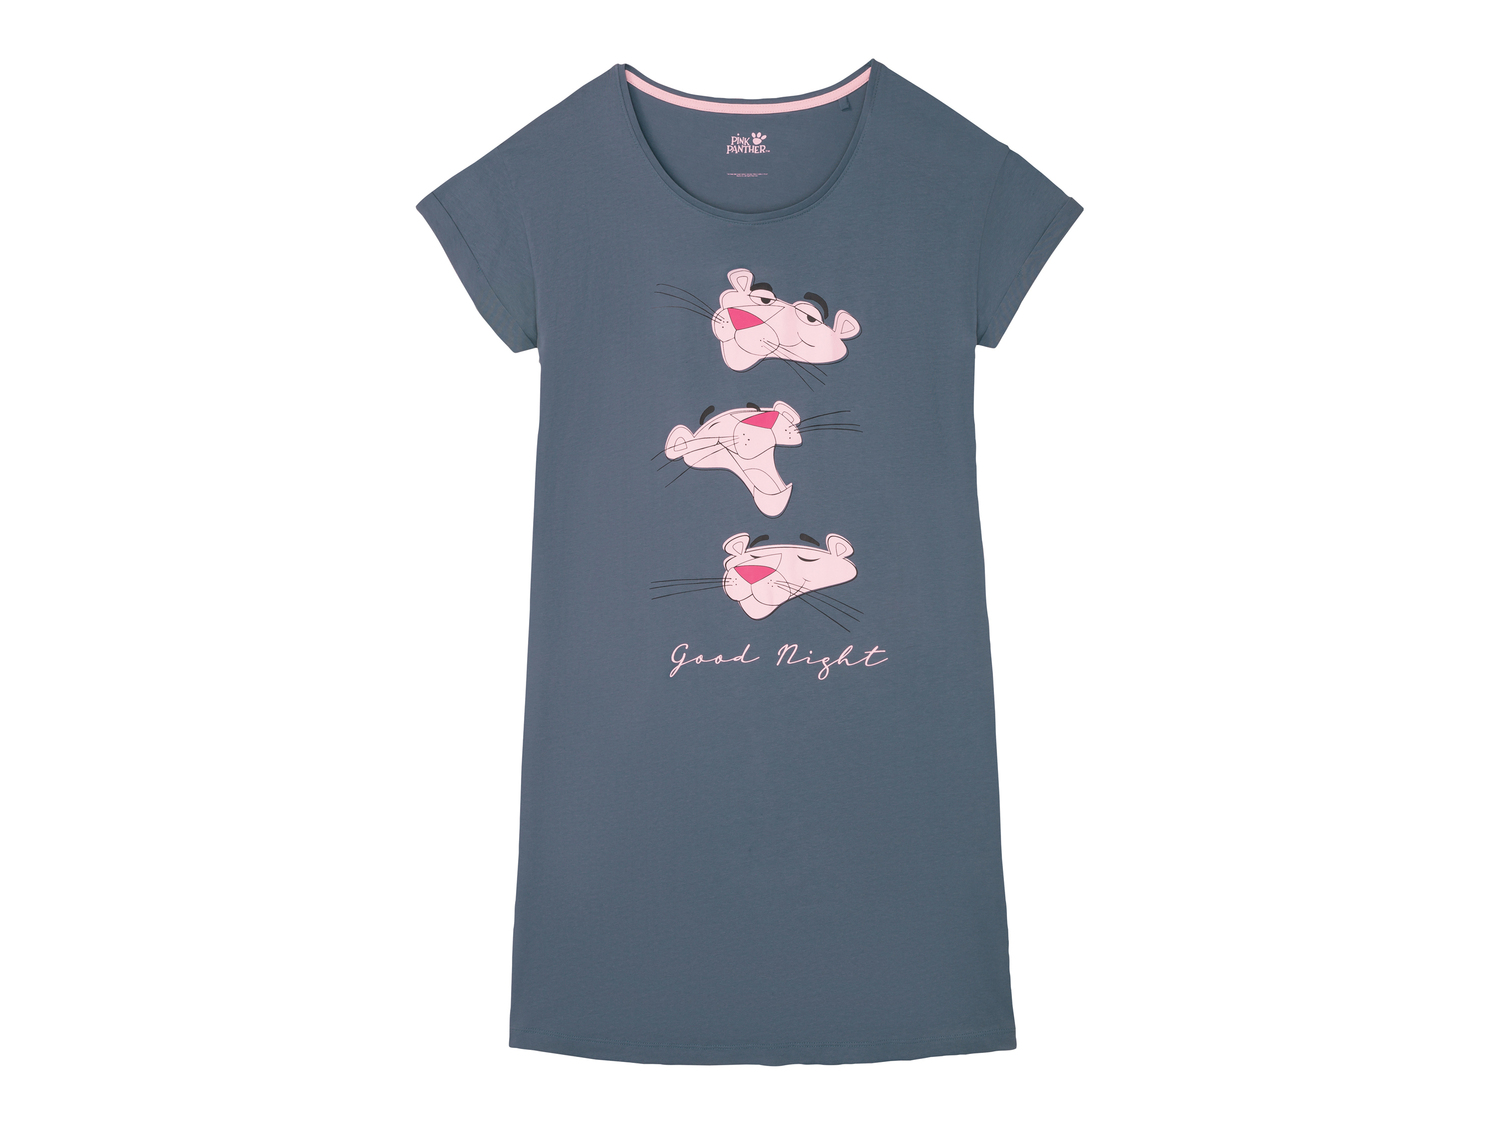 Maxi t-shirt da donna Wonder Woman, Pantera Rosa, Snoopy Oeko-tex, prezzo 5.99 € ...